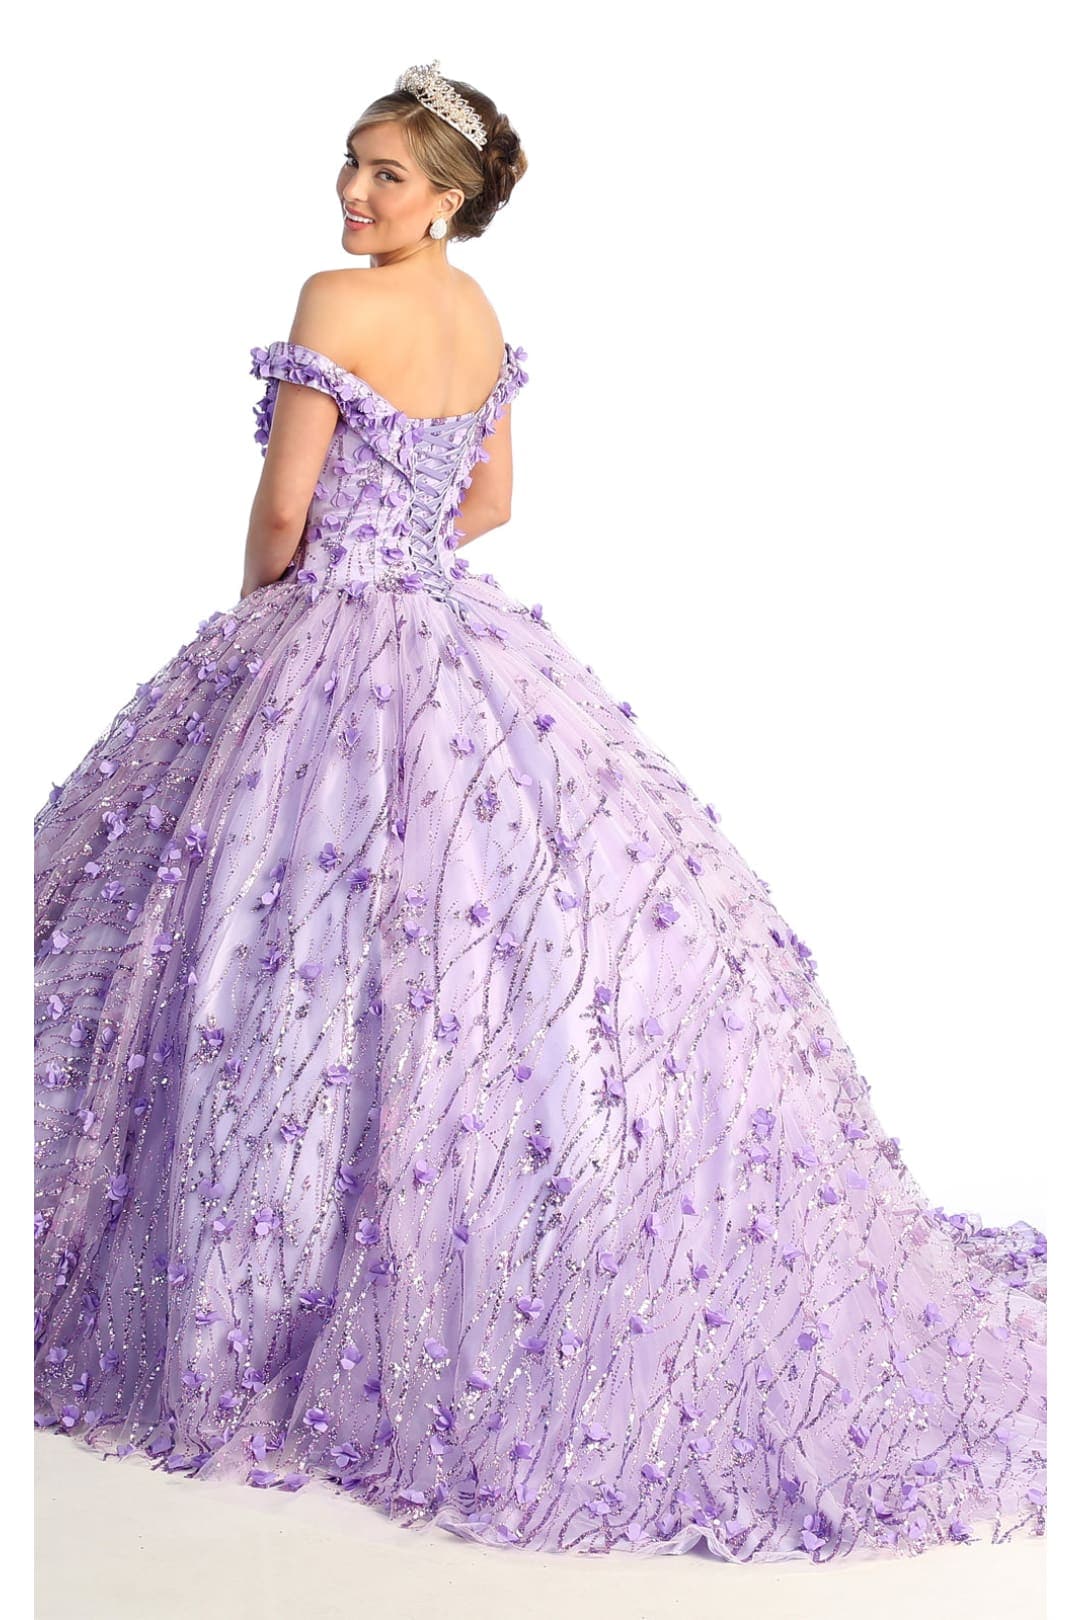 3D Floral Ligh-Up Quinceanera Dress GL16 Glitterati Style Prom